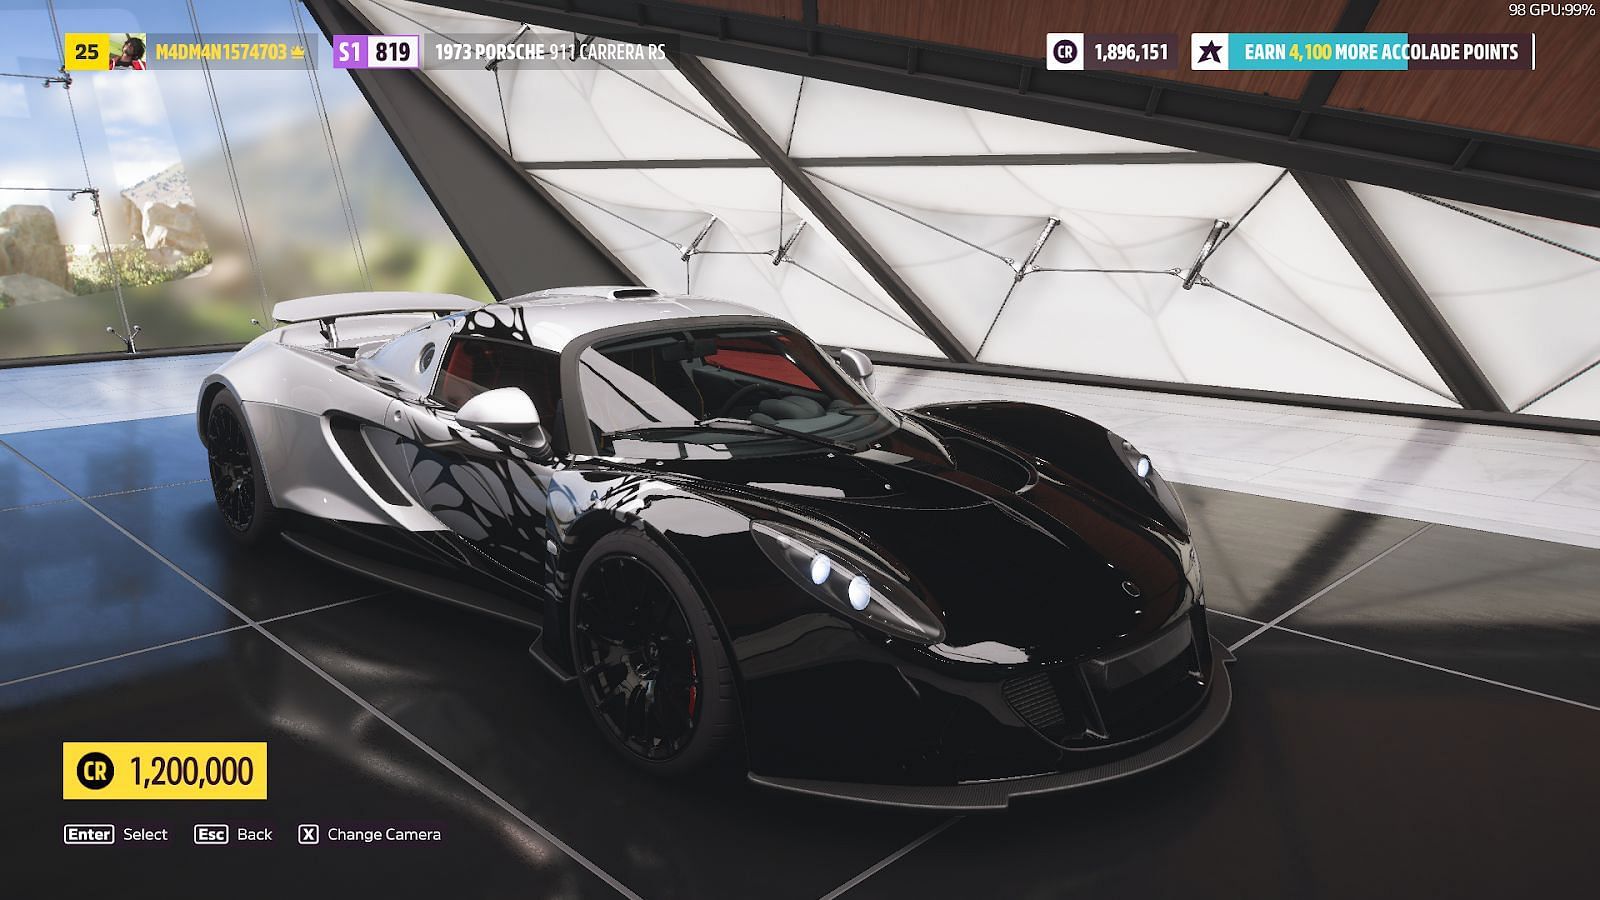 Modified Lotus Elise supercar is a beast on the road (Image via Forza Horizon 5)